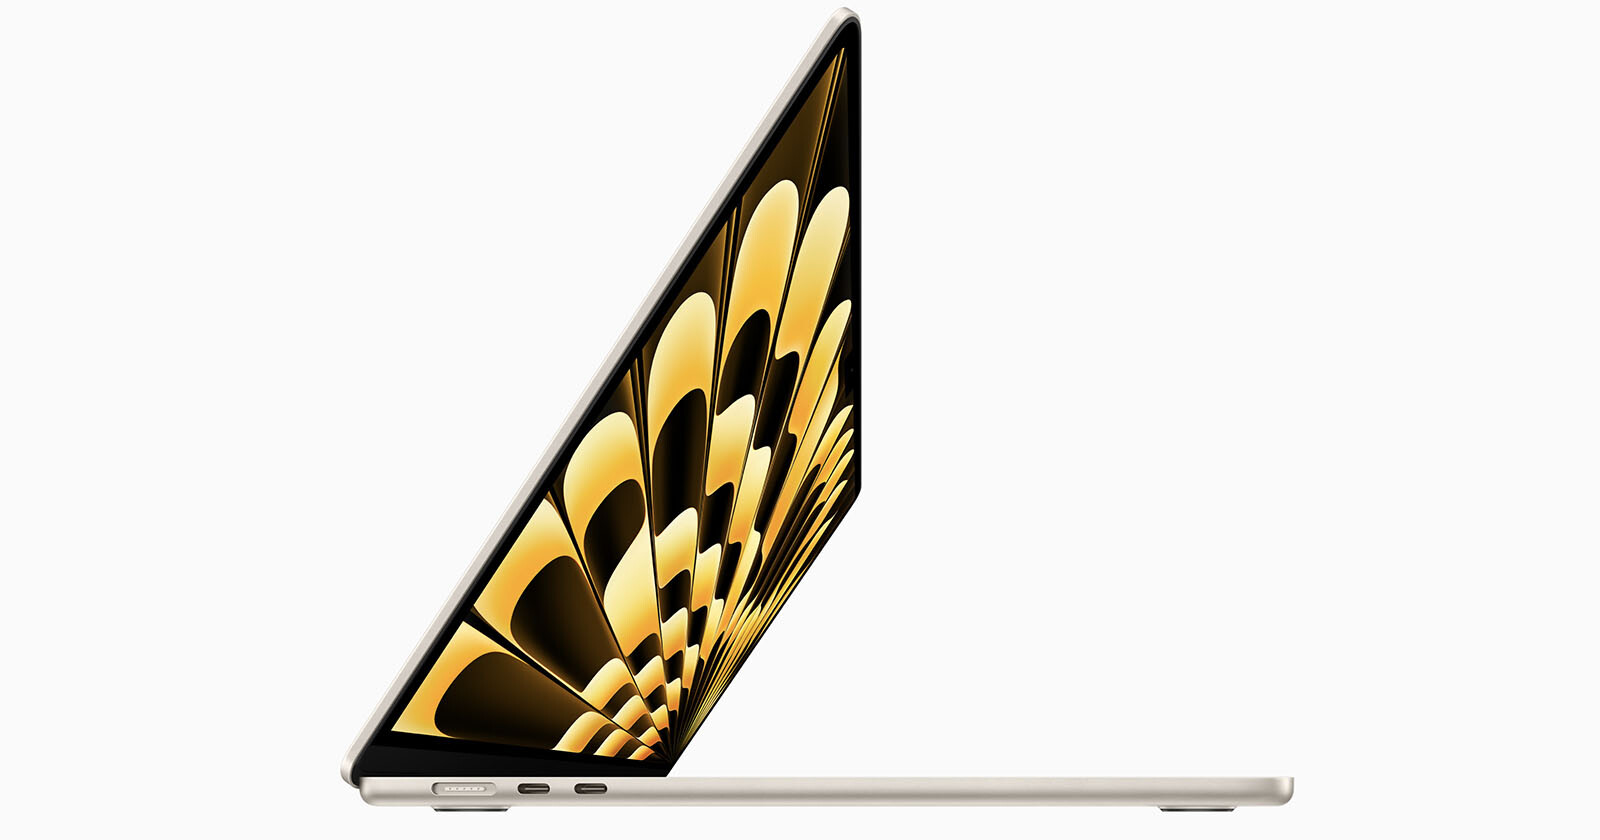  apple air macbook 15-inch 